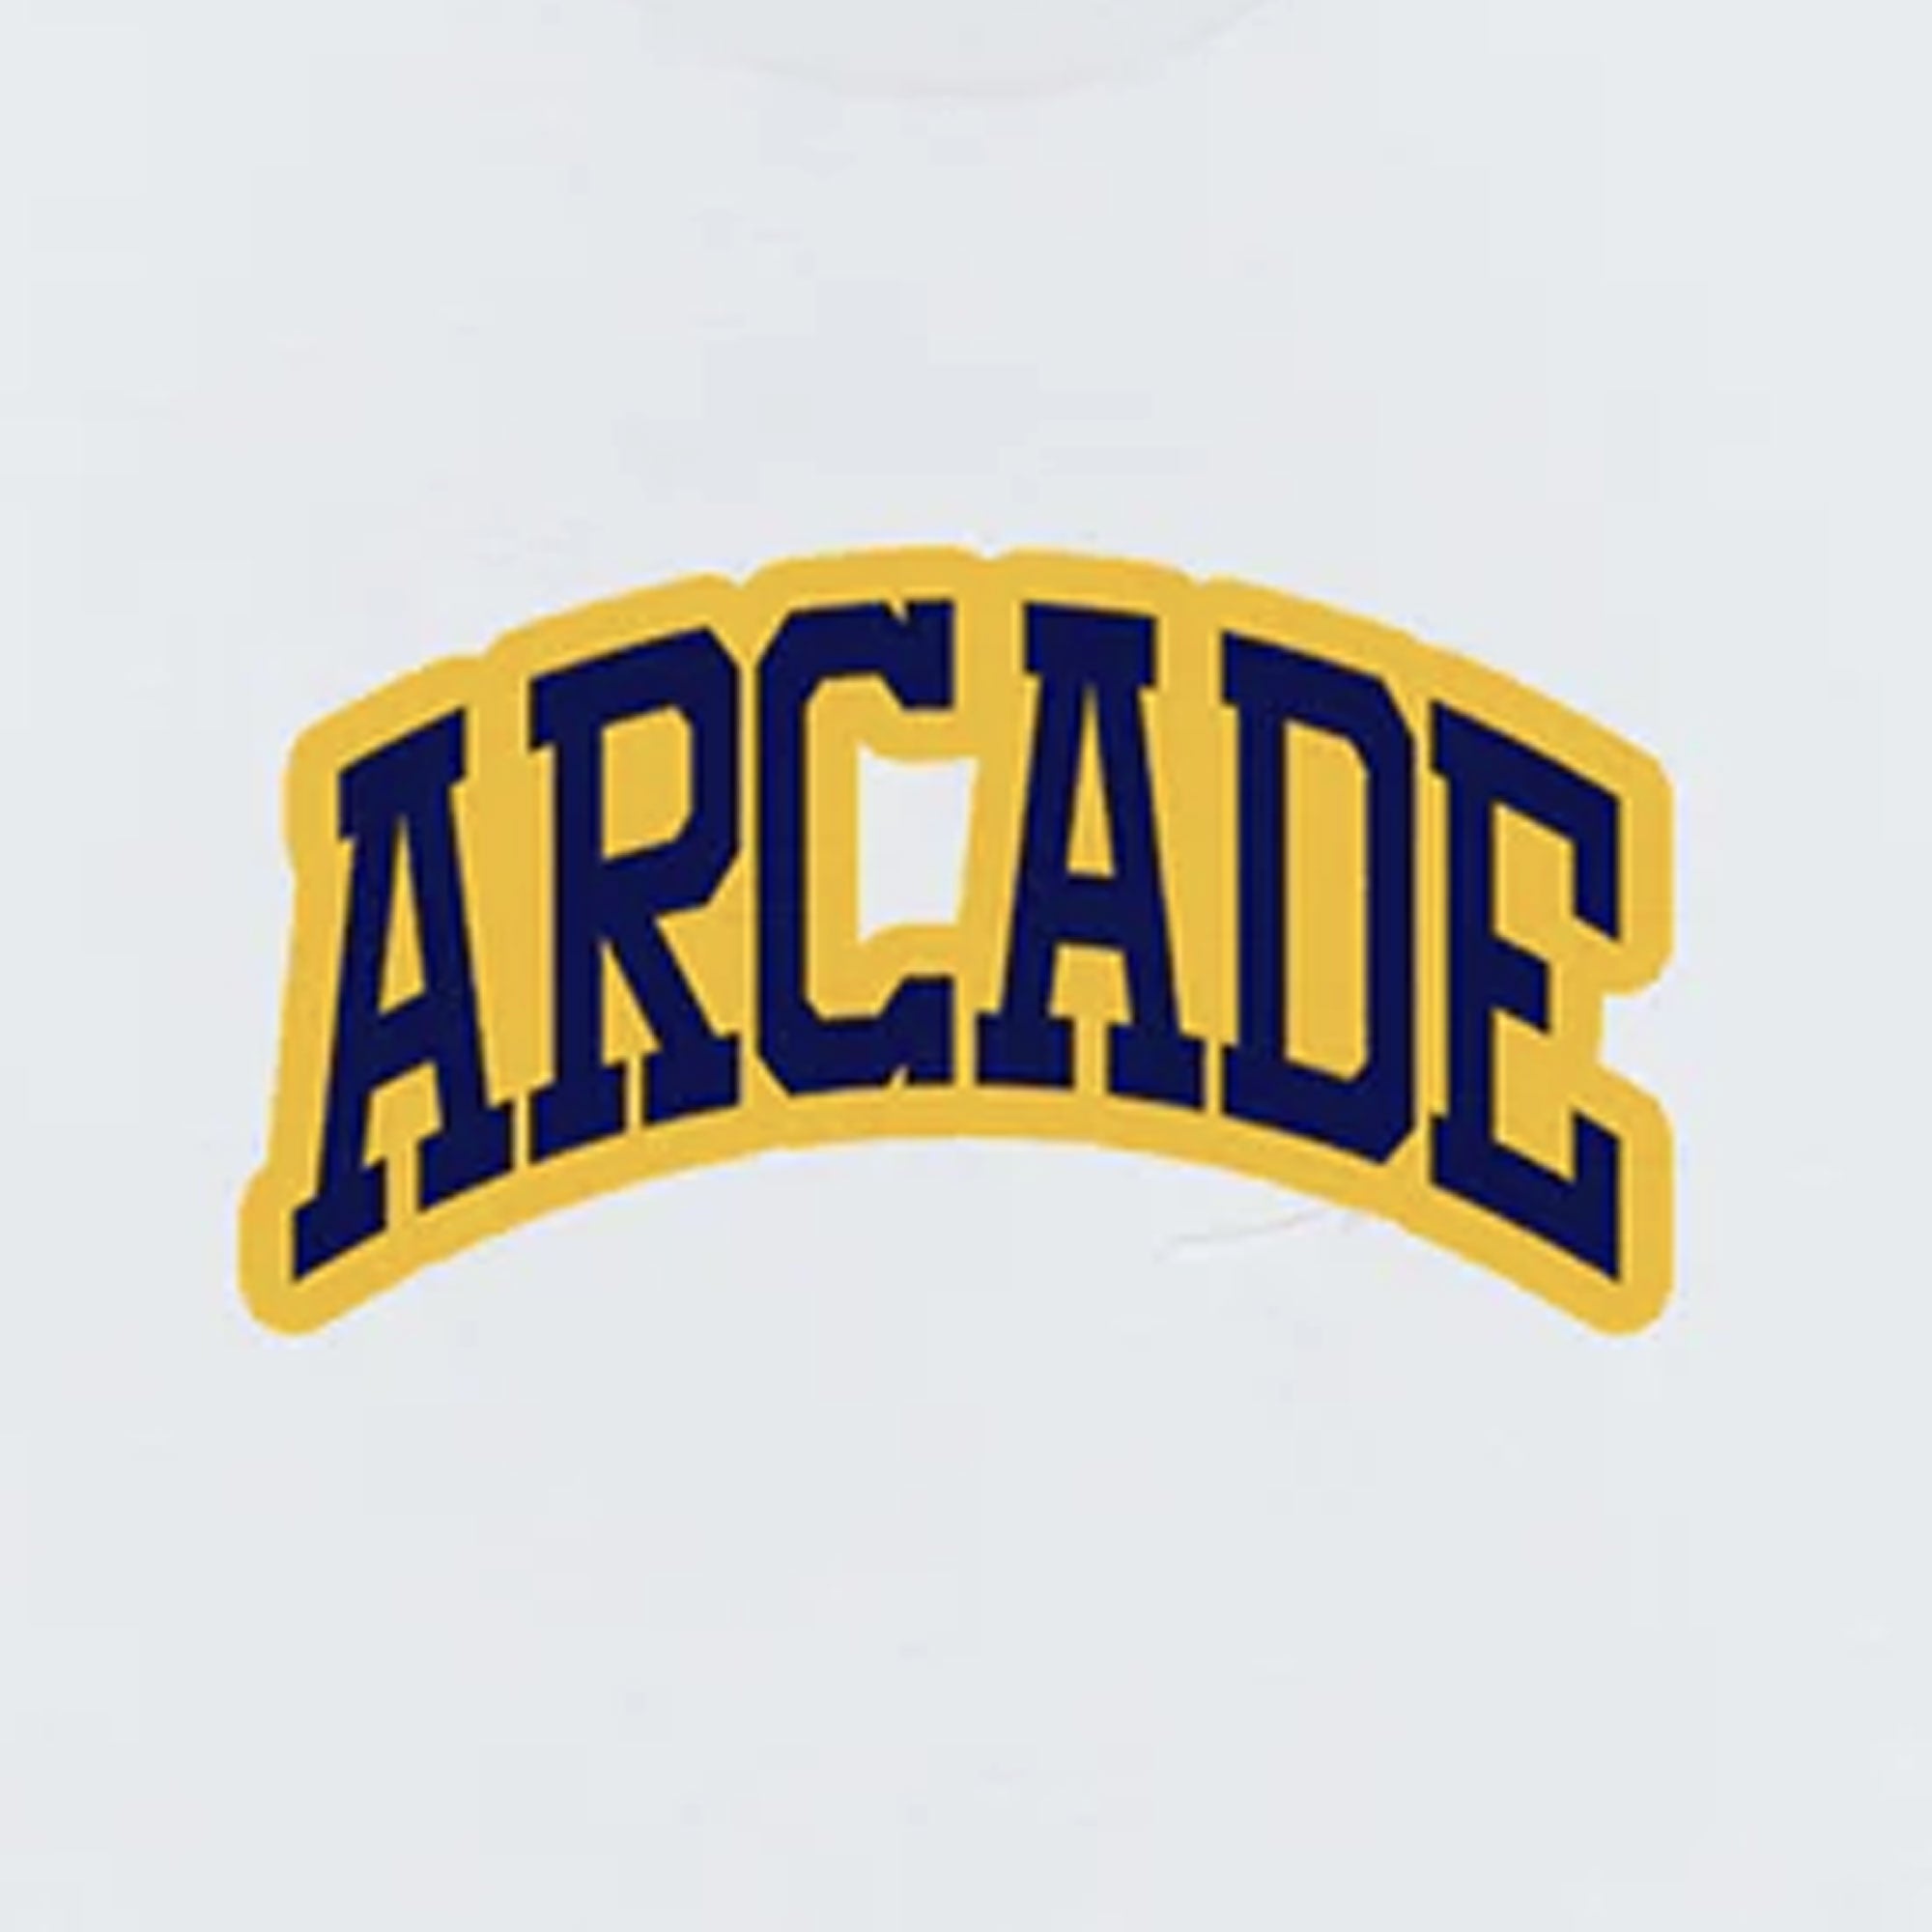 Arcade Arch Tee - White